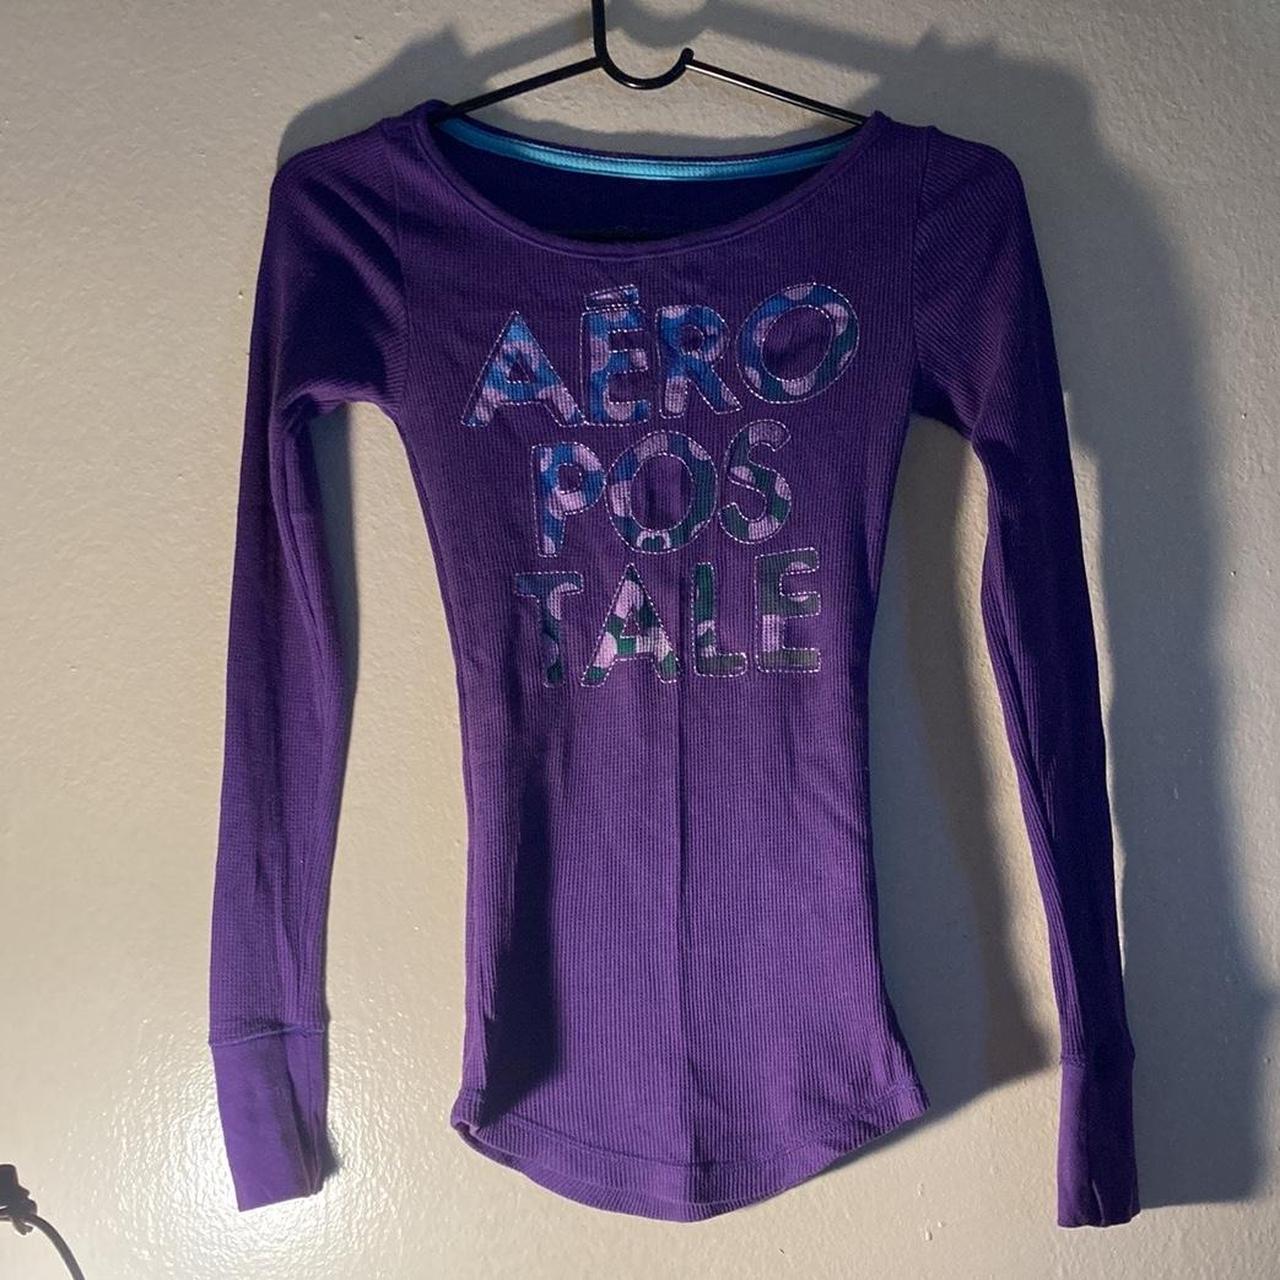 aeropostale shirts for girls purple